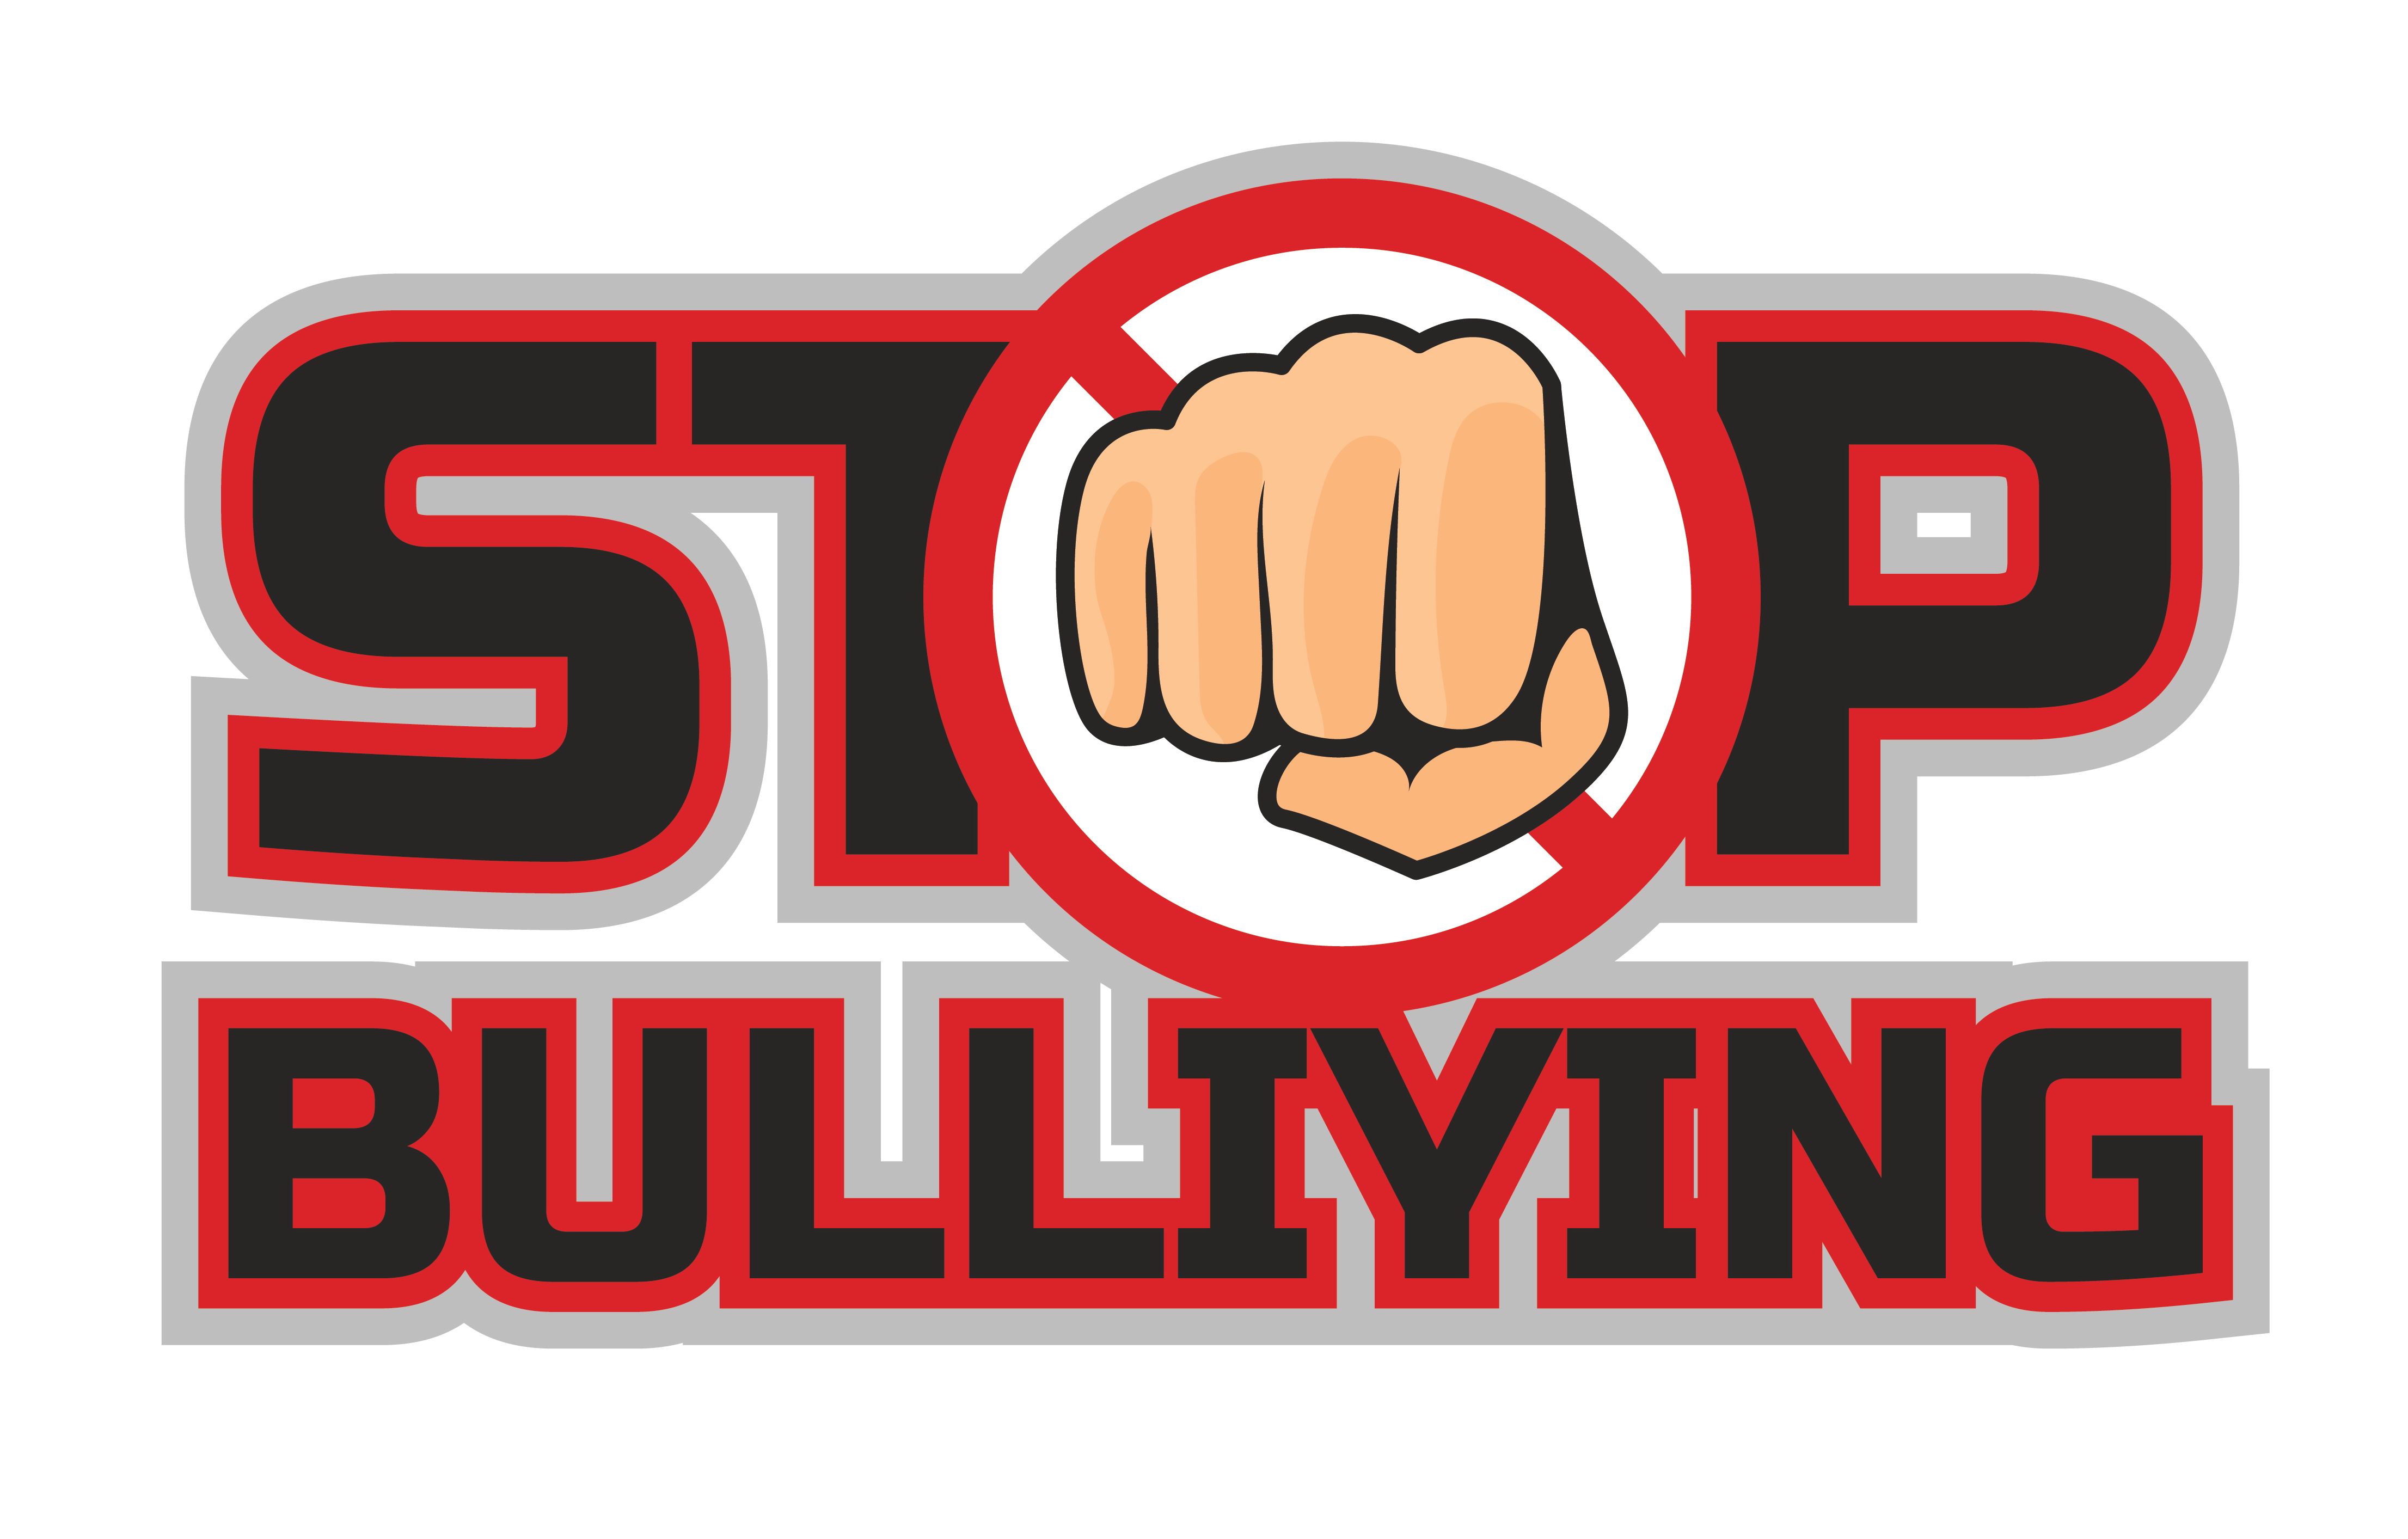 —Pngtree—stop bullying no bullying logo_4011438